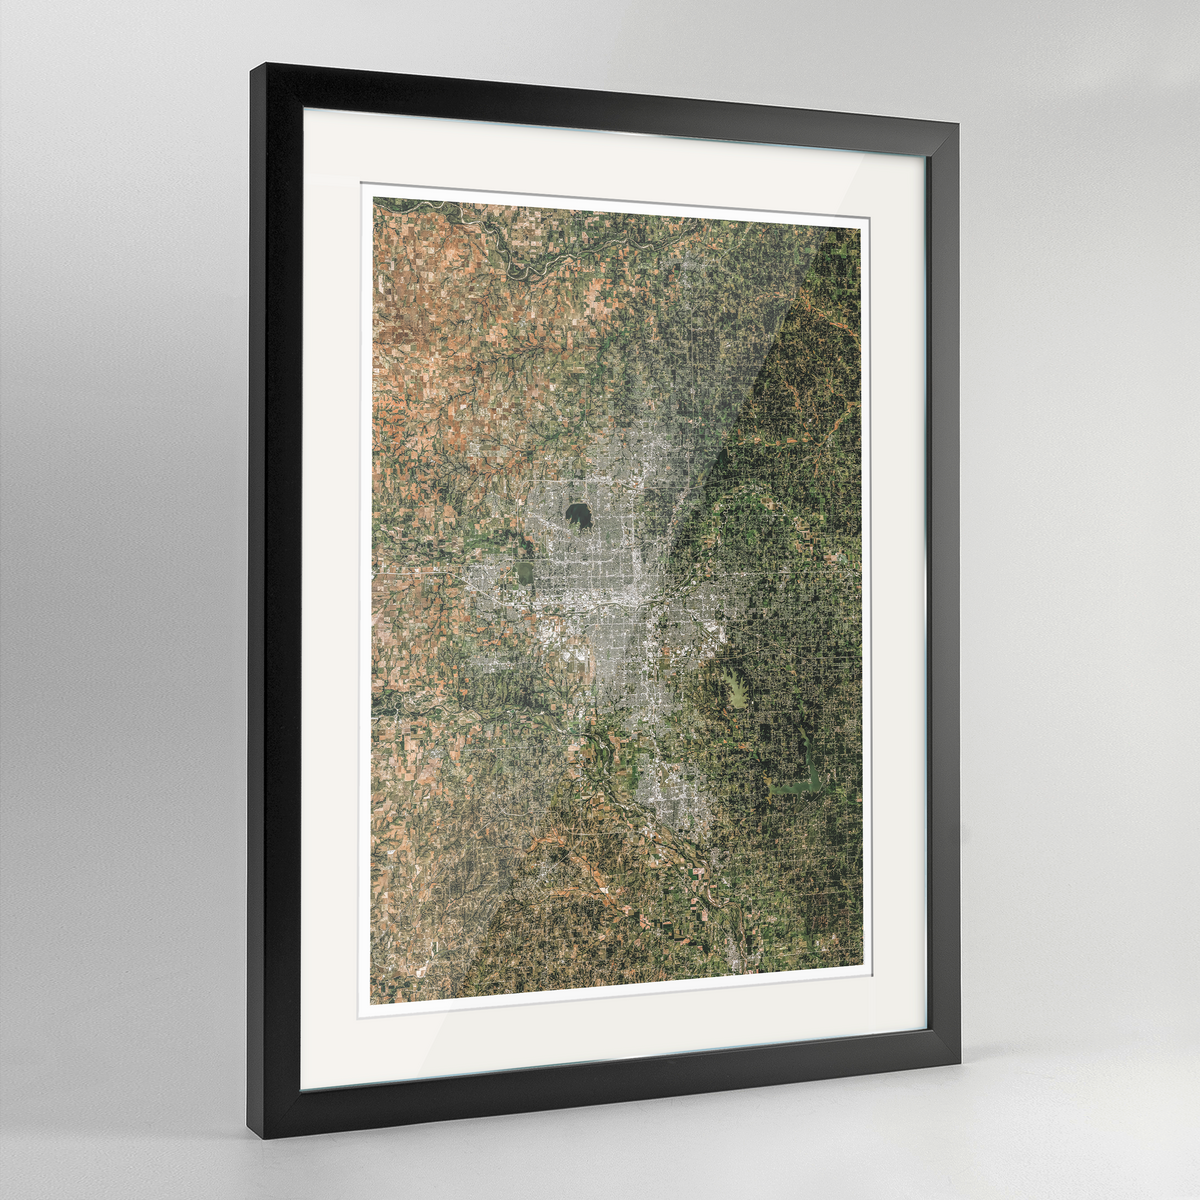 Oklahoma City Earth Photography Art Print - Framed